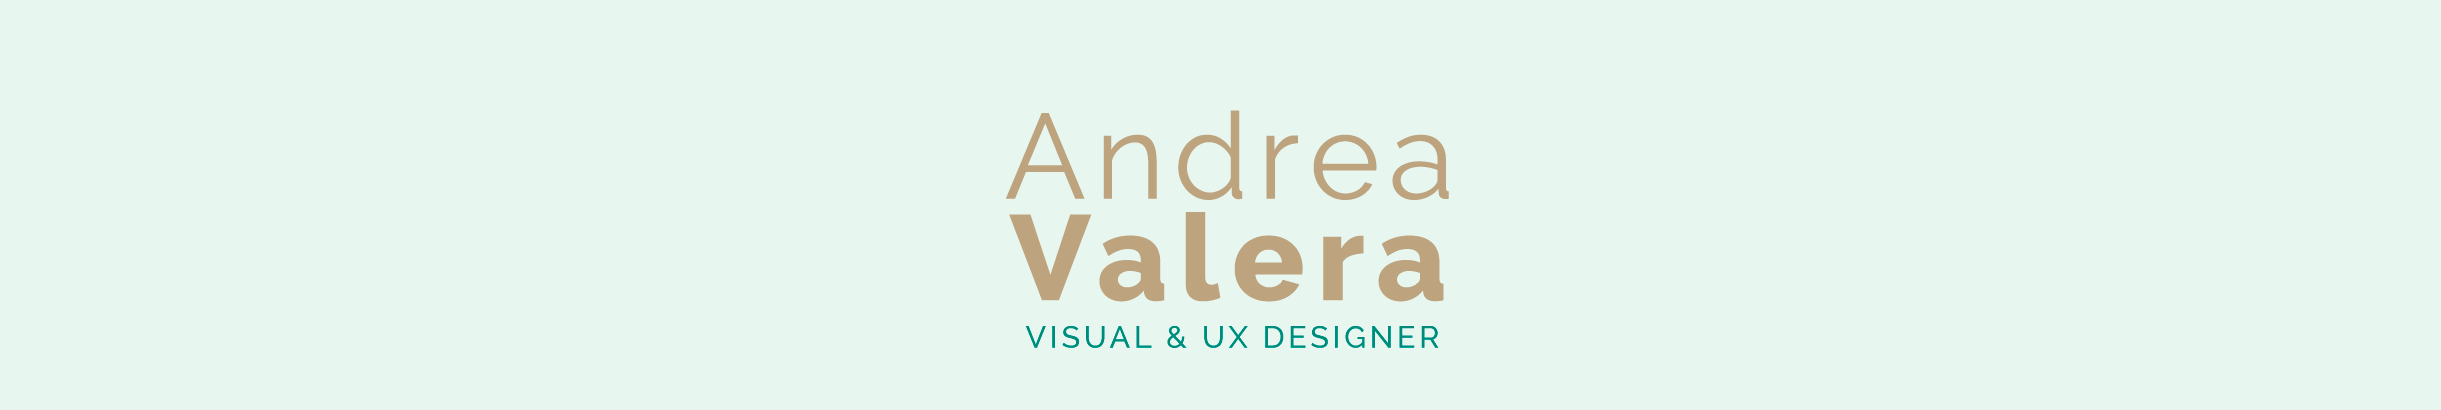 Andrea Valera profil başlığı